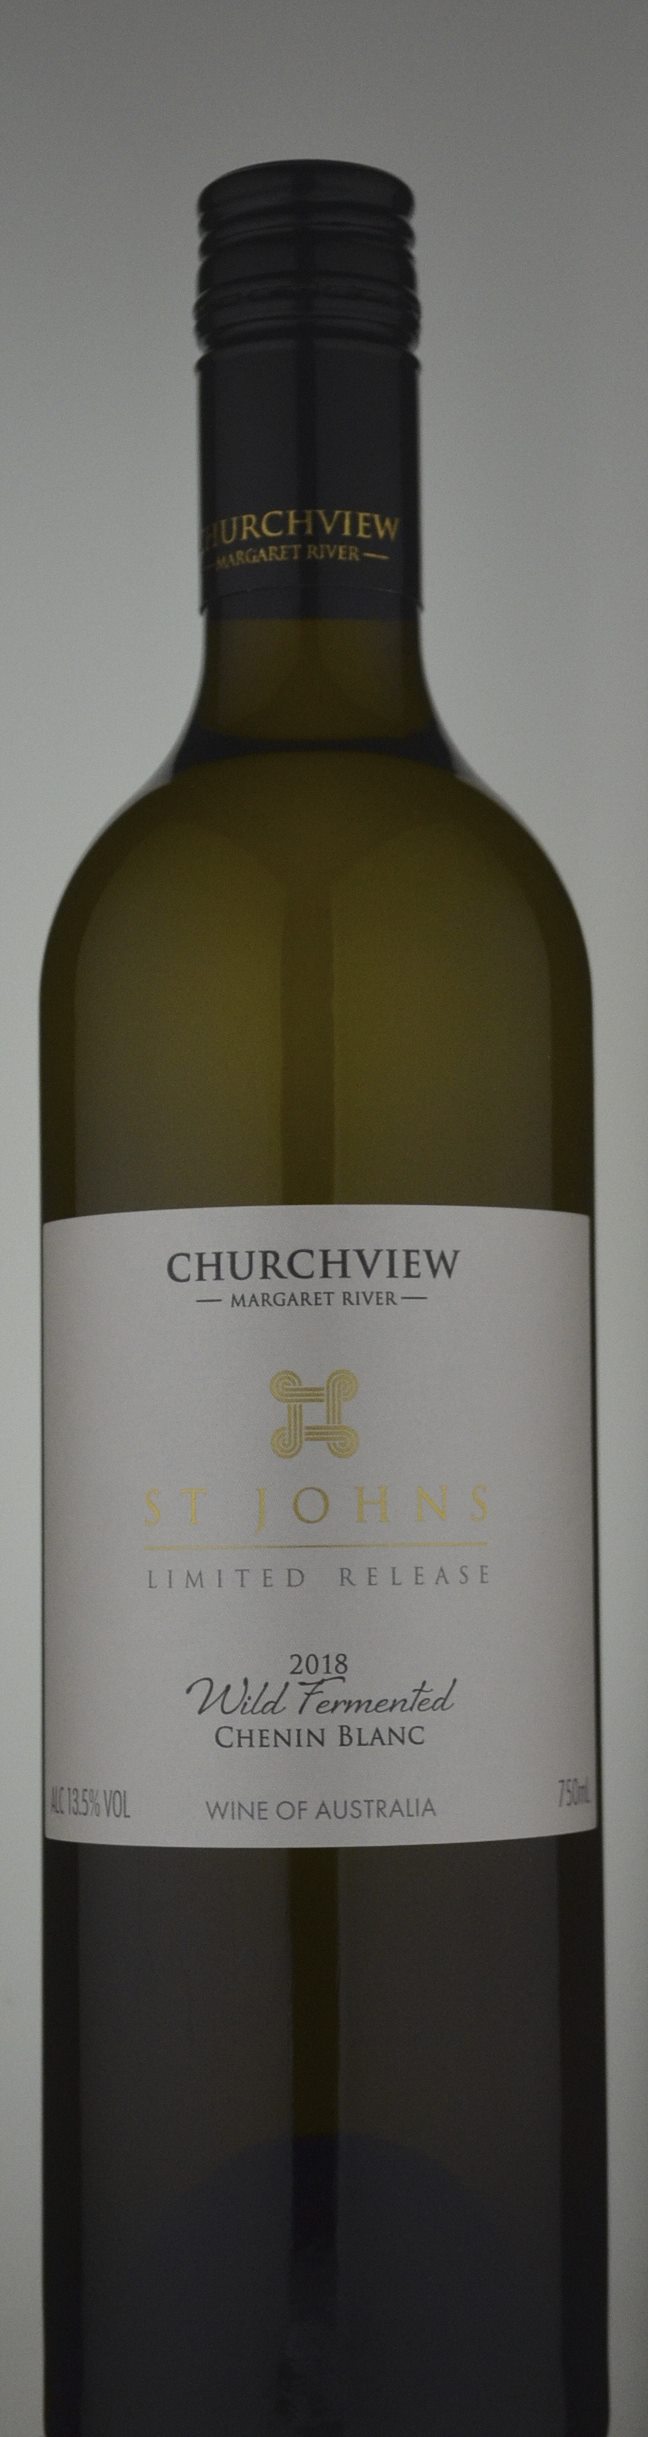 Churchview Estate St Johns Limited Release Wild Fermented Chenin Blanc 2018